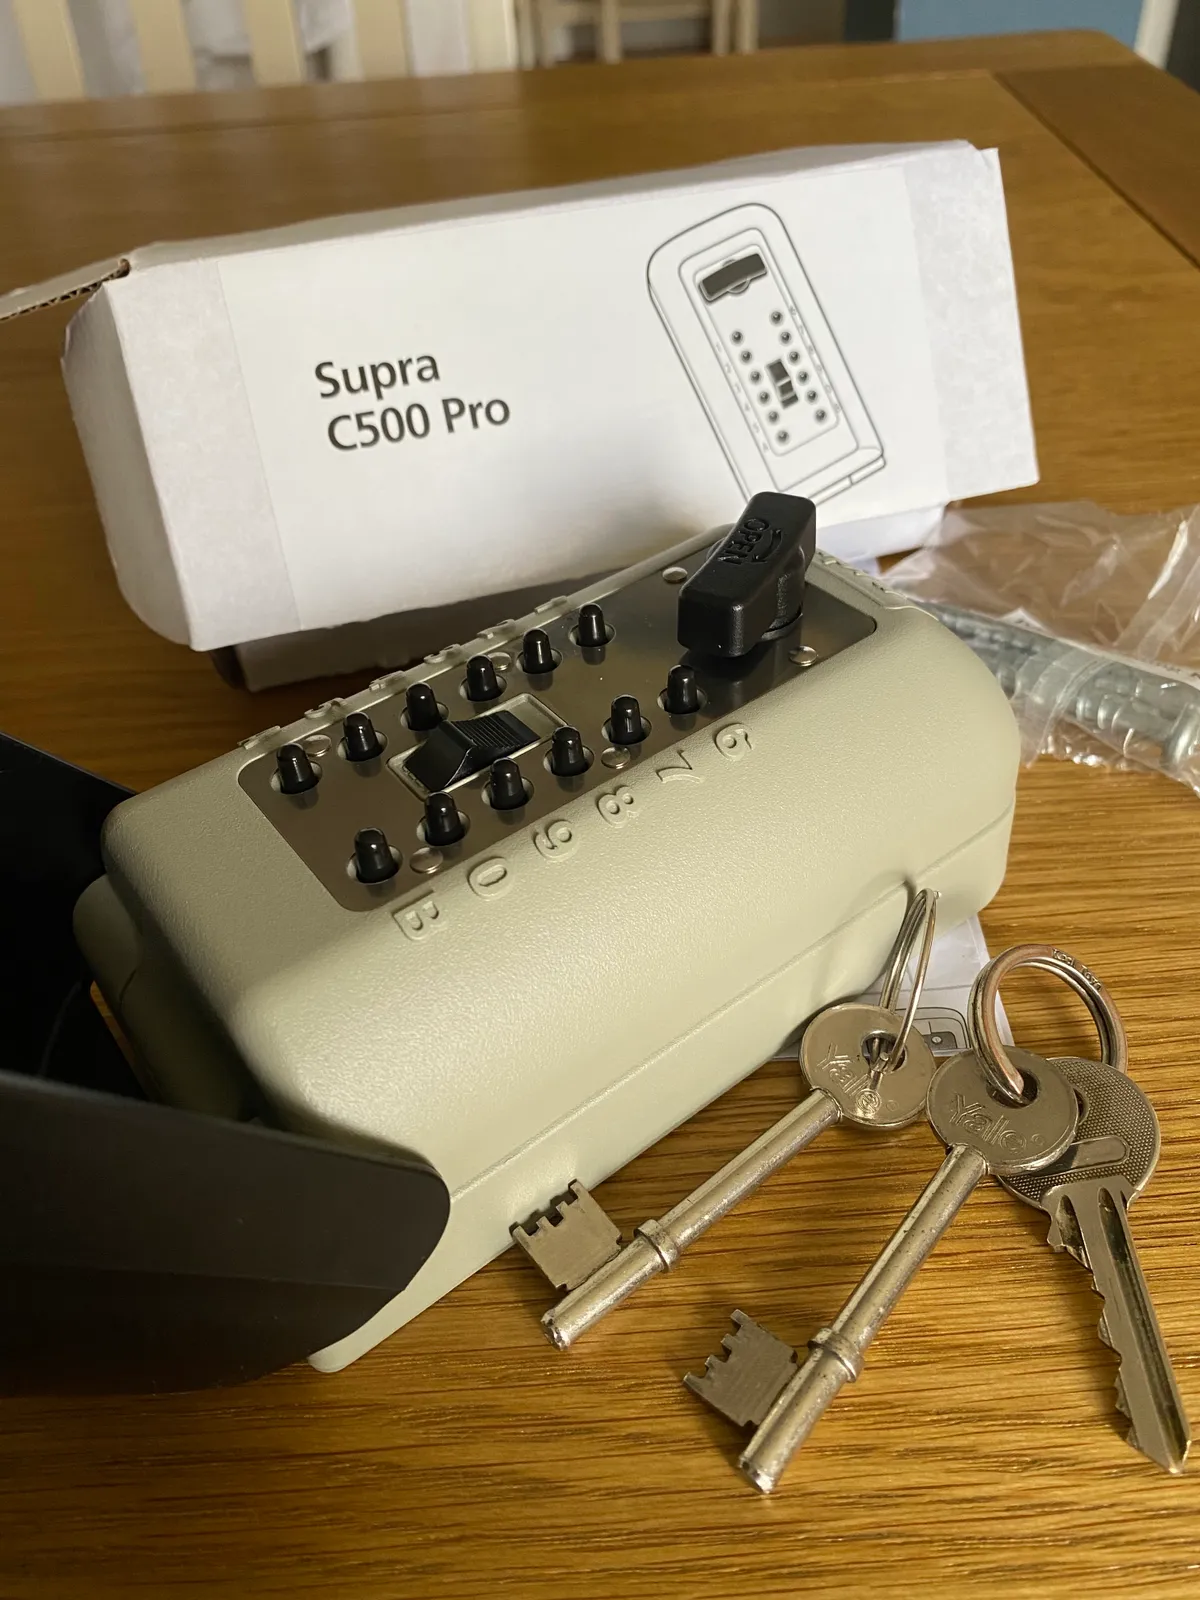 Supra C500 Pro key safe